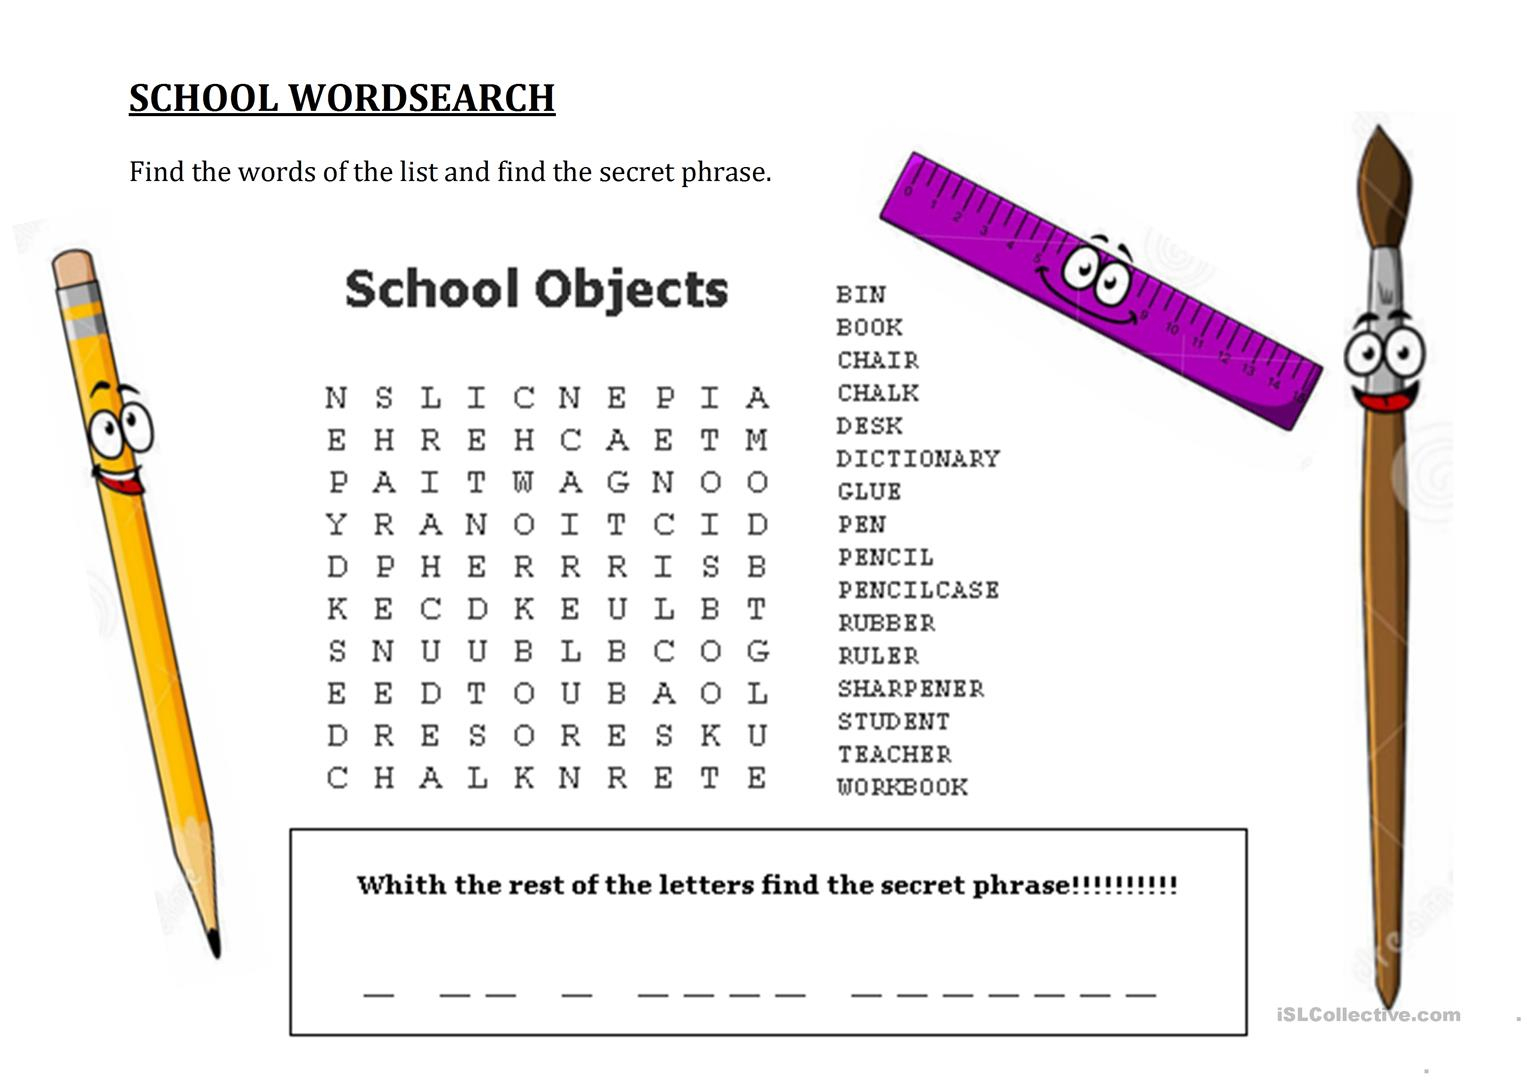 School Wordsearch - Hidden Message - English Esl Worksheets